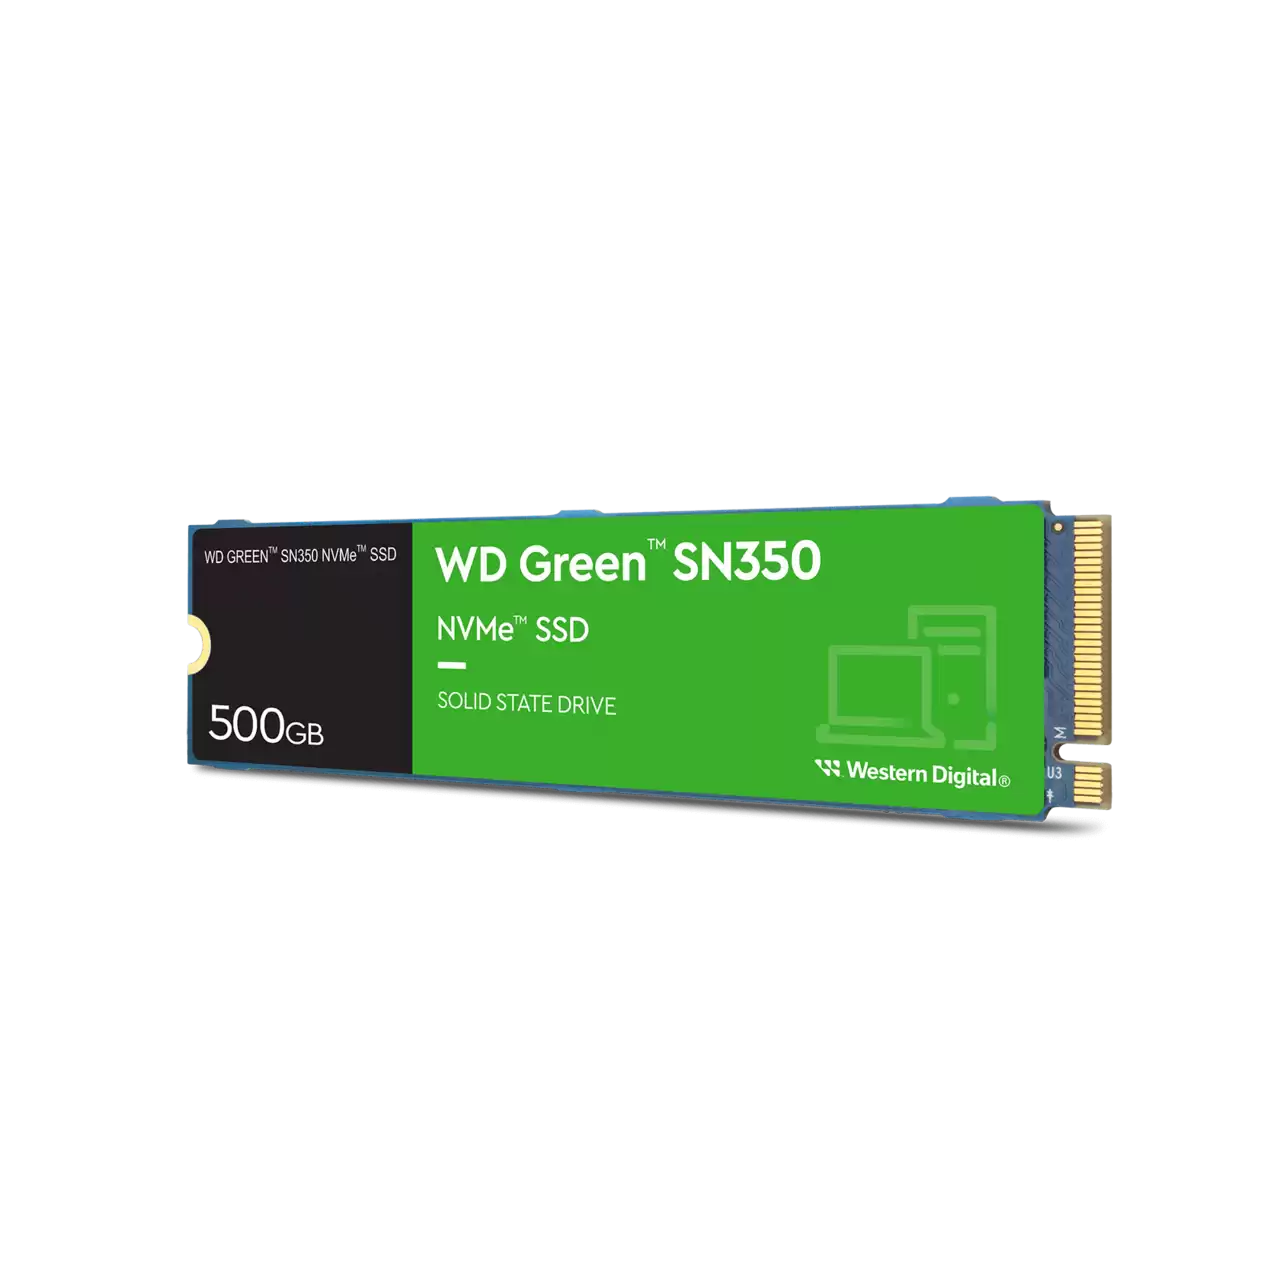 Western Digital 500GB WD Green SN350 NVMe Internal SSD Solid State Drive